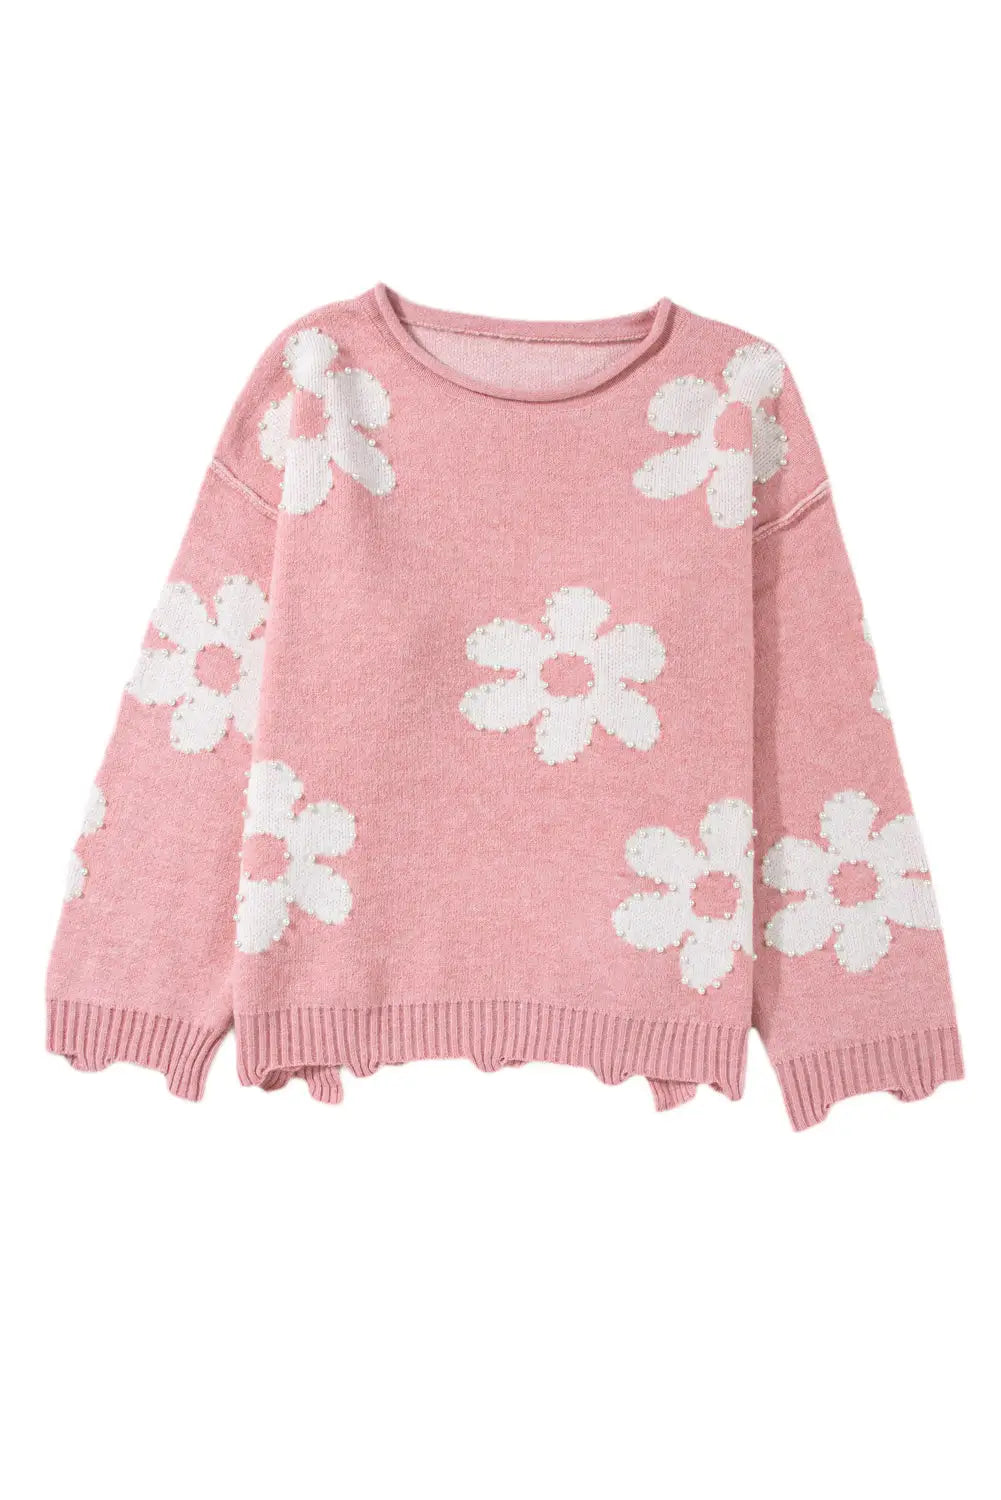 Bonbon pearl beaded floral drop shoulder sweater - sweaters & cardigans